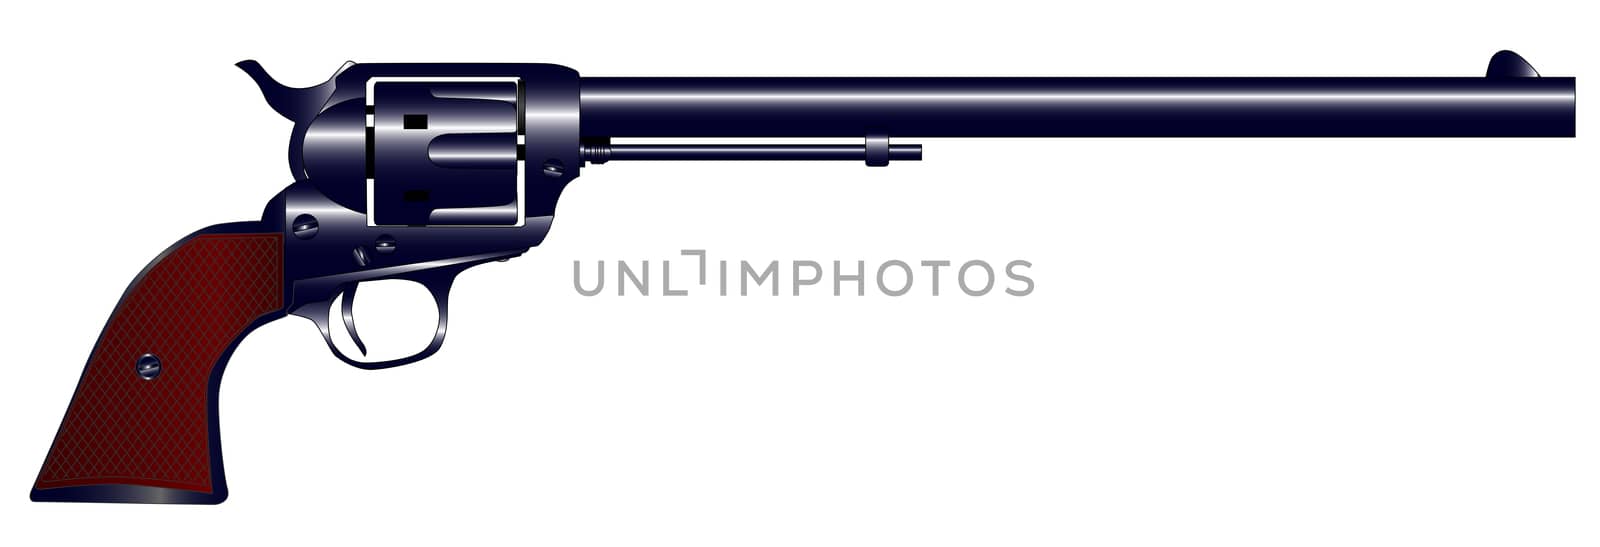 The Wyatt Earp Buntline Special long barrel six gun.